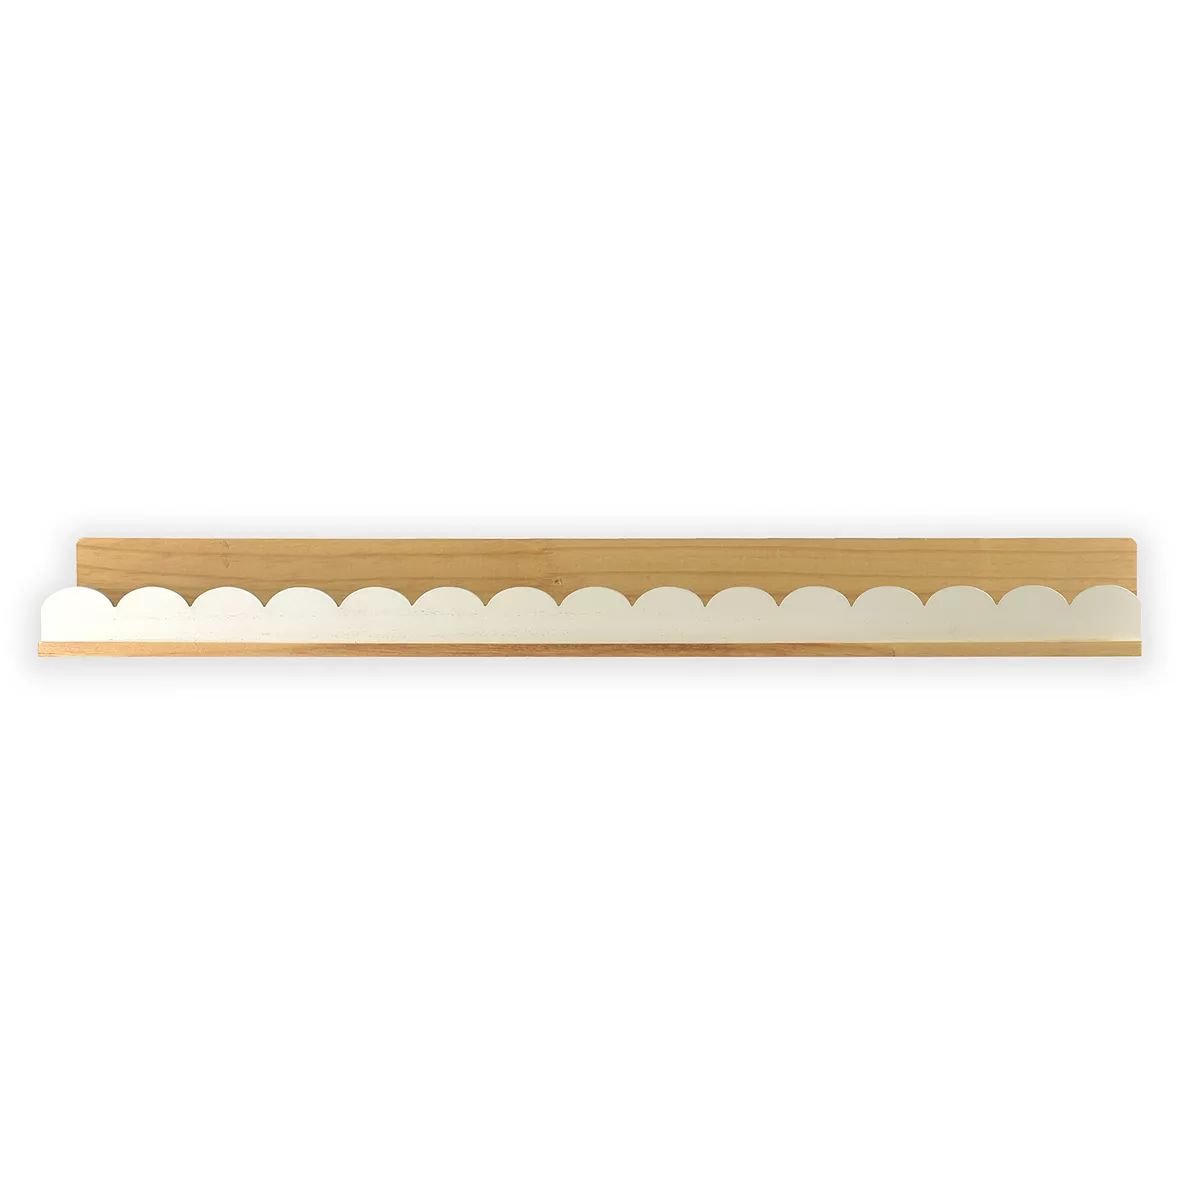 The Big One® Wood Scalloped Shelf | Kohl's